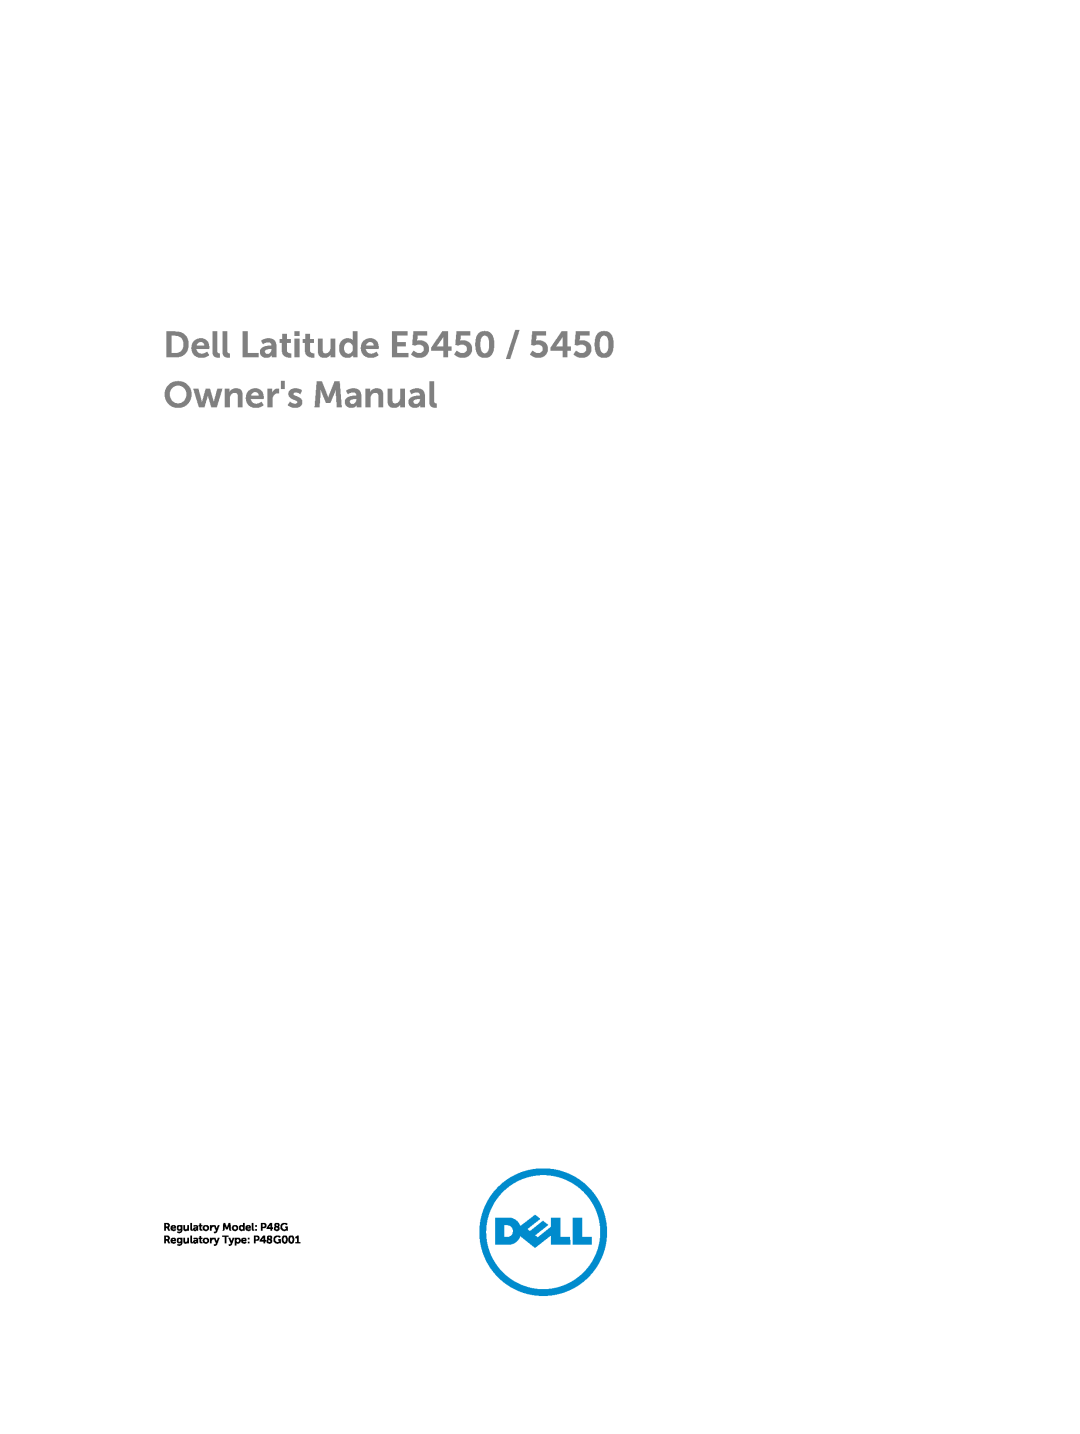 Dell owner manual Dell Latitude E5450 Owners Manual, Regulatory Model P48G Regulatory Type P48G001 